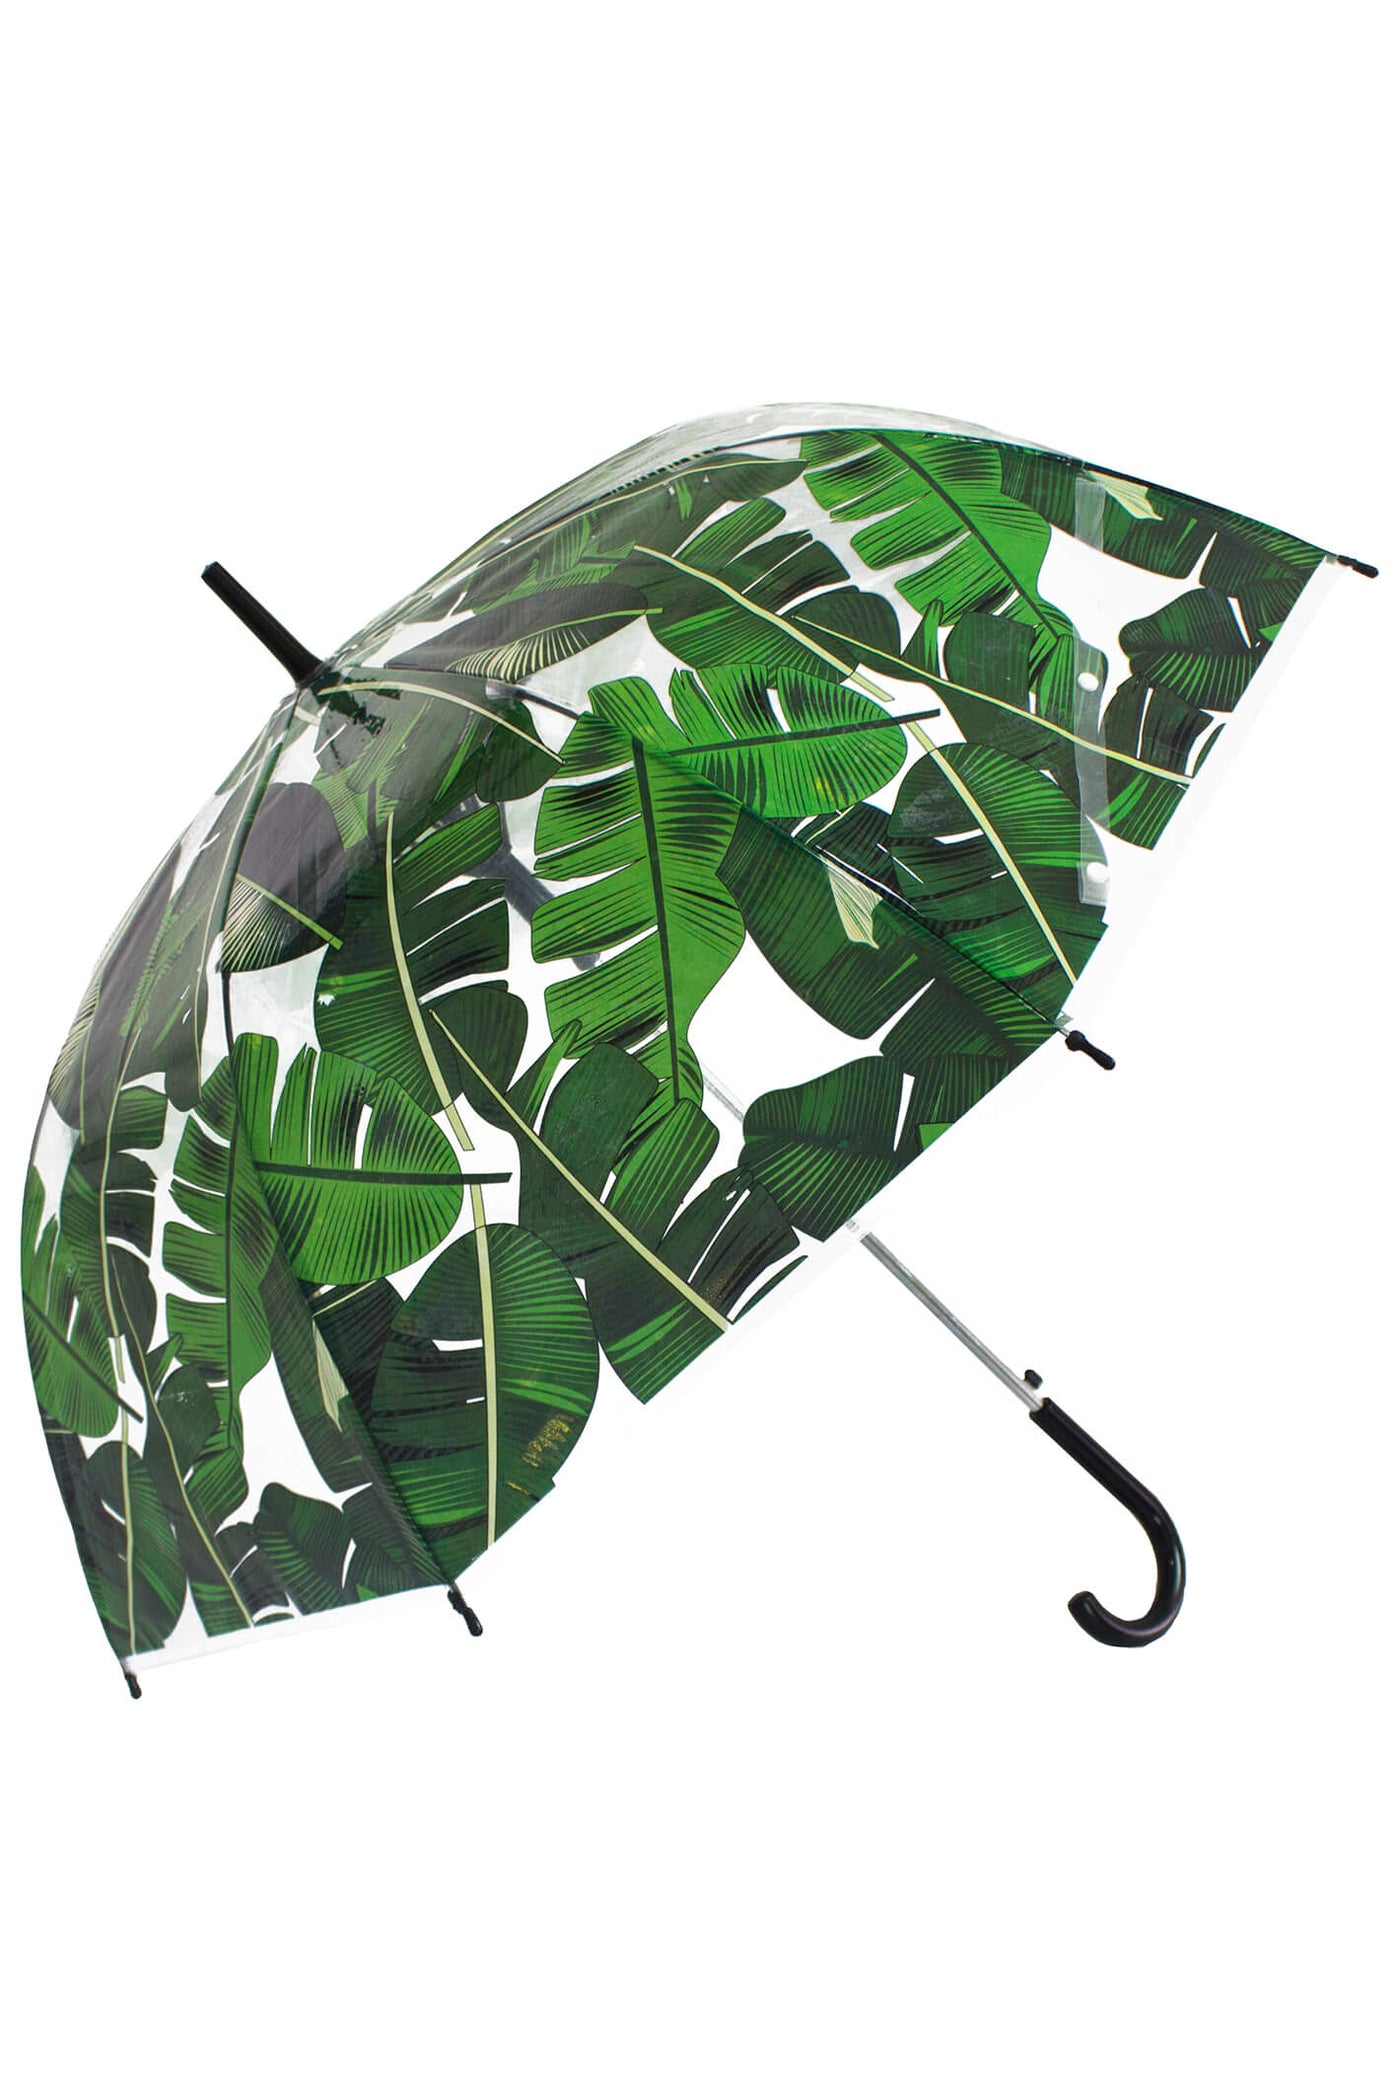 Blooms Of London Palm Leaf Transparent Umbrella